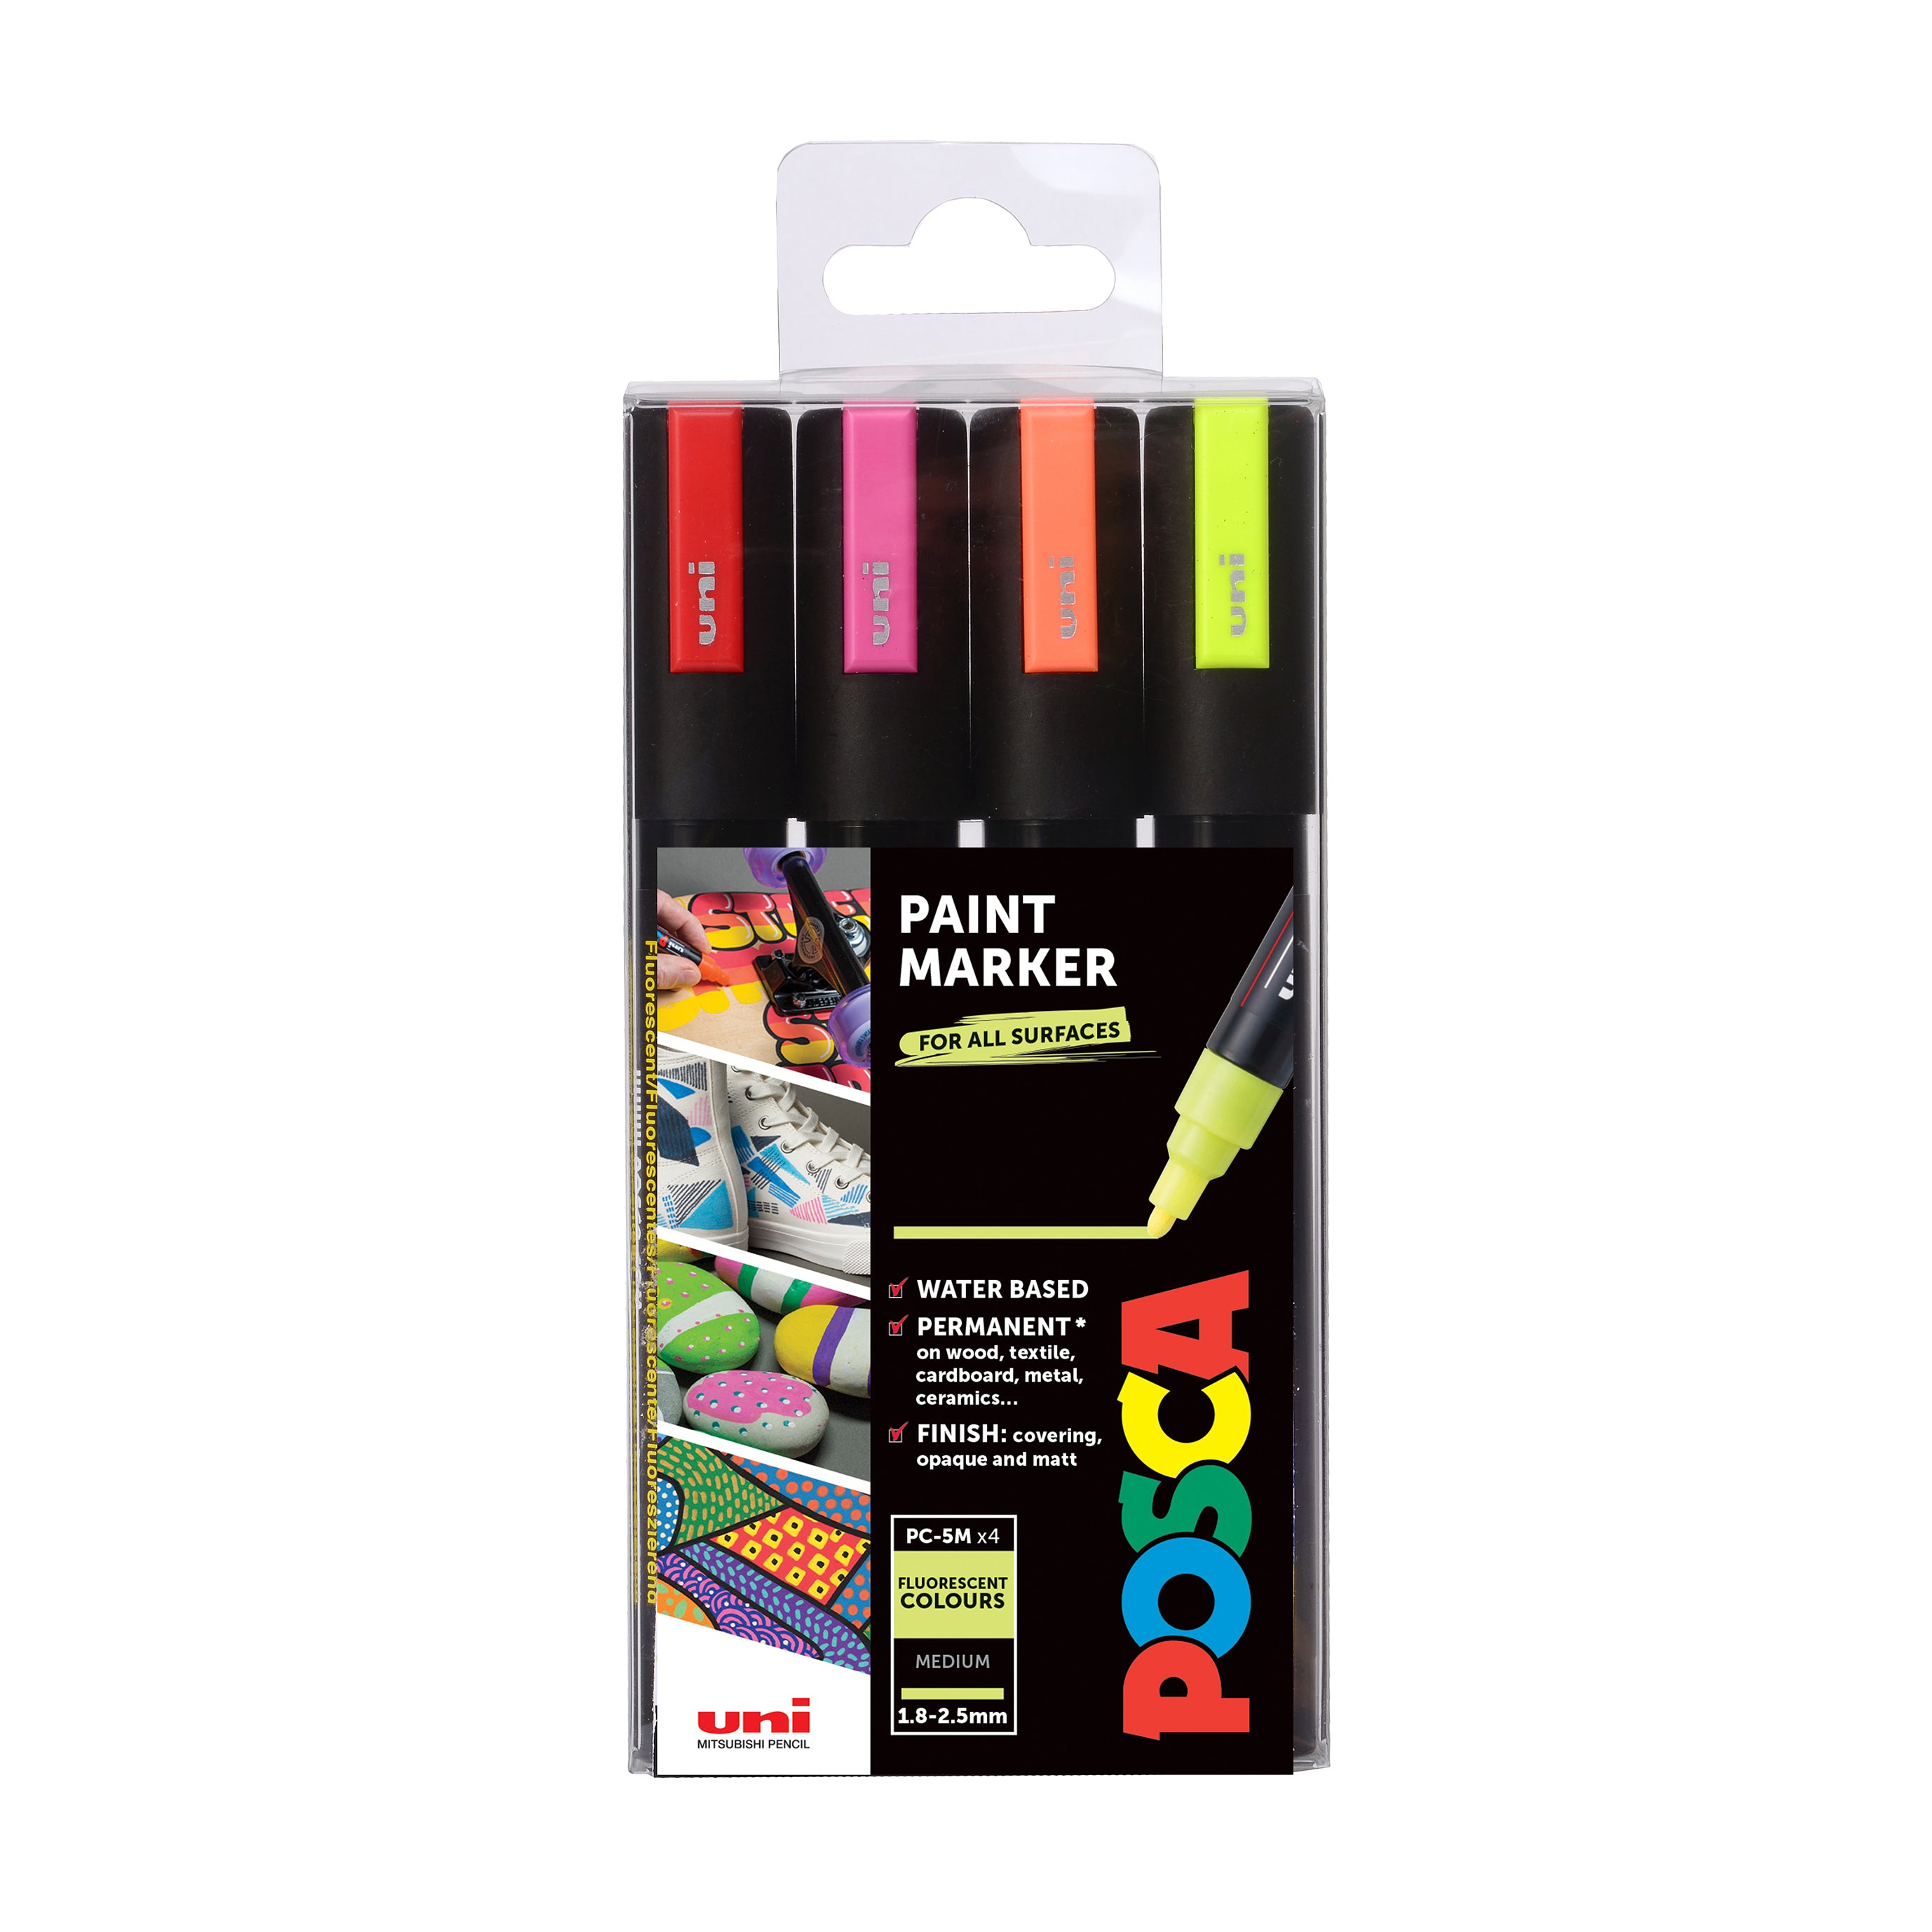 POSCA Medium Bullet tipped Marker Pens - Assorted Fluorescent Pack of 4 pens PC 5M